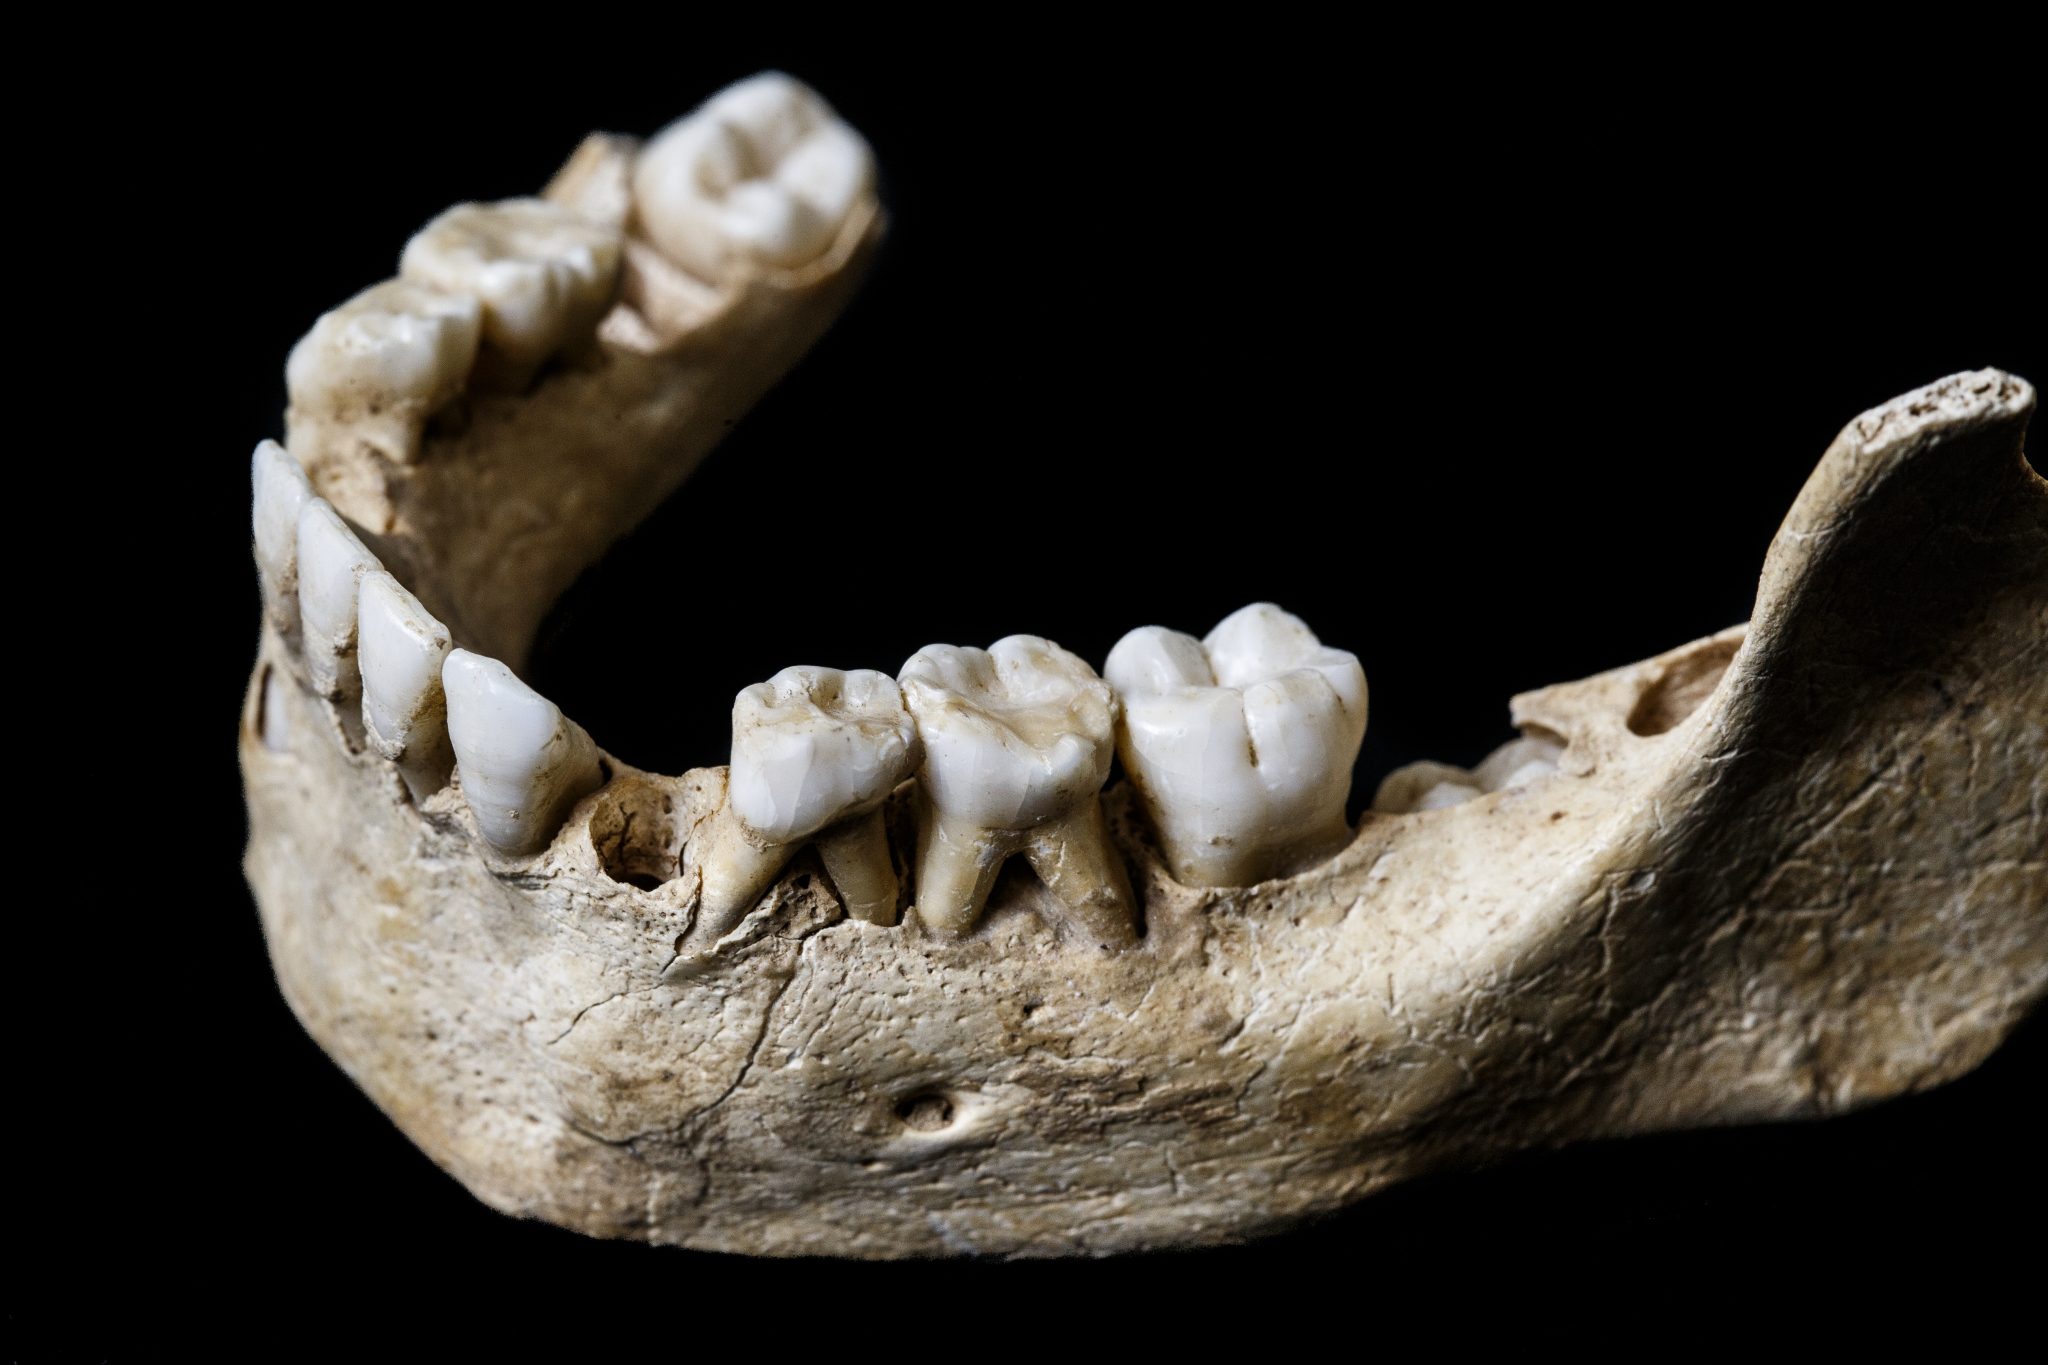 Image of mandible and teeth